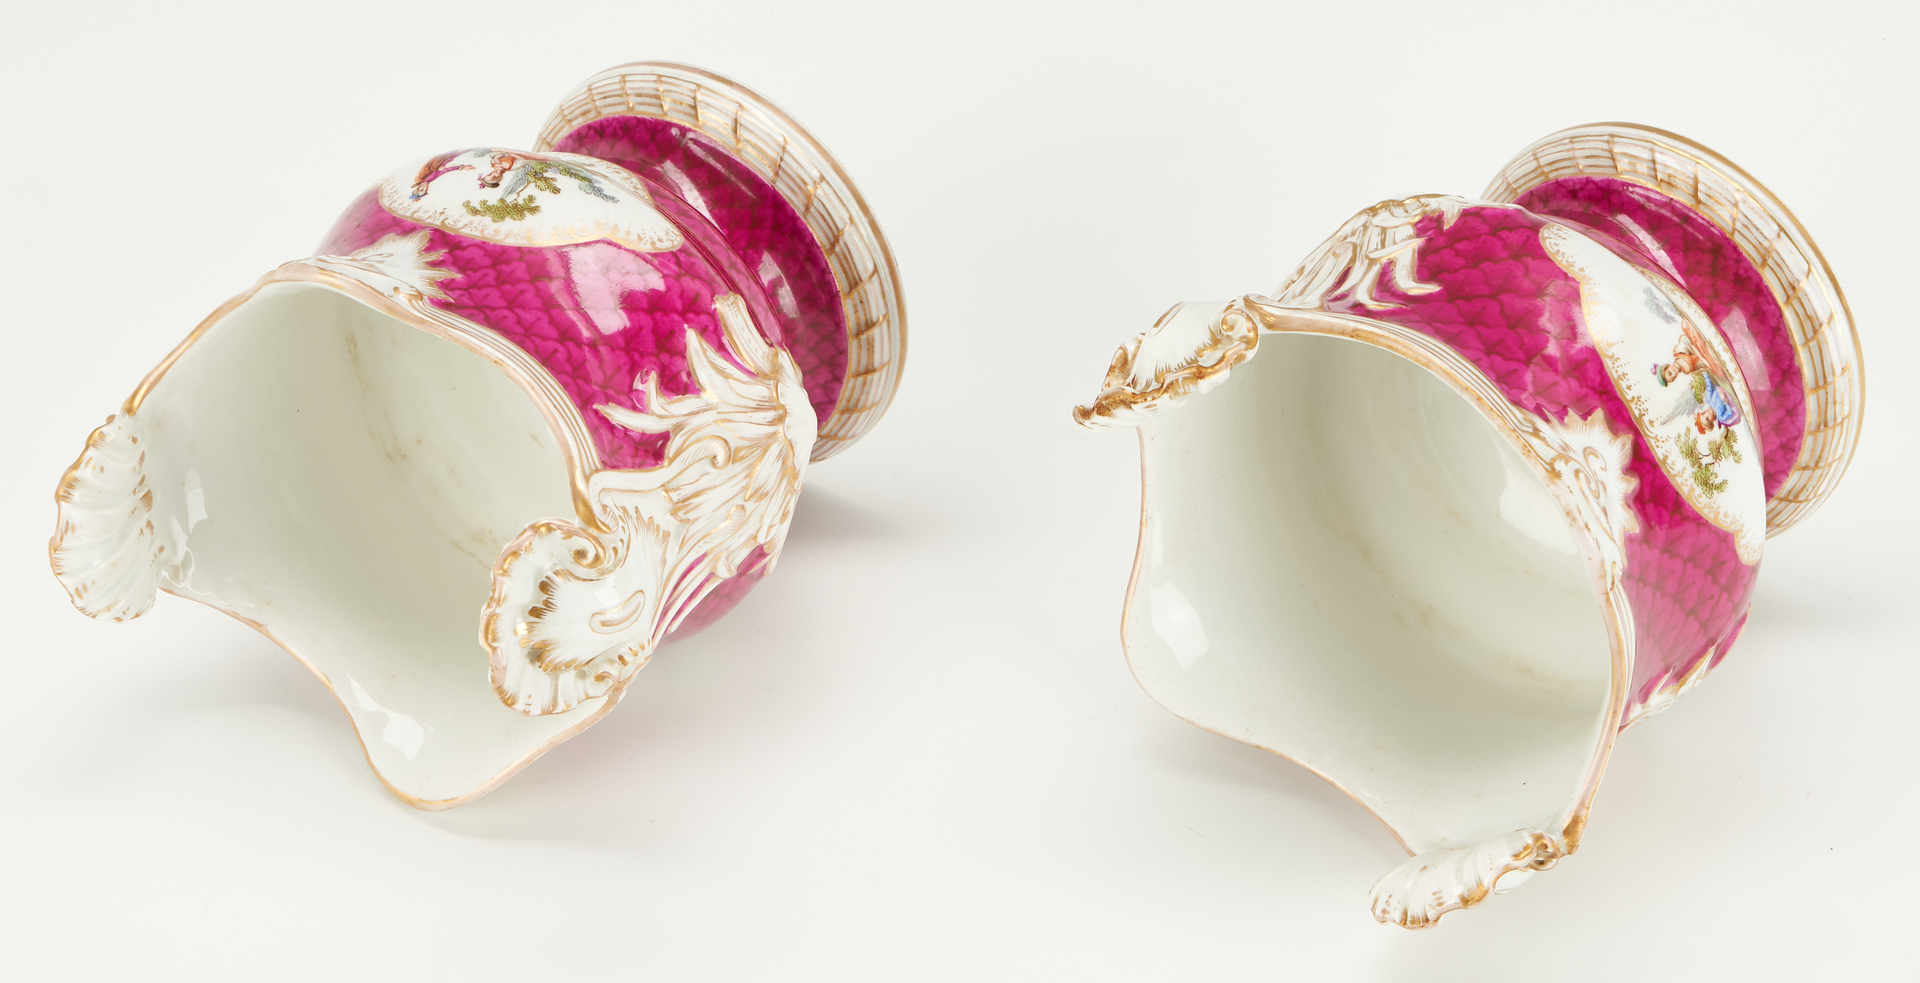 Lot 964: 4 Dresden Porcelain Items, Urns and Cachepots, attrib. Helena Wolfsohn